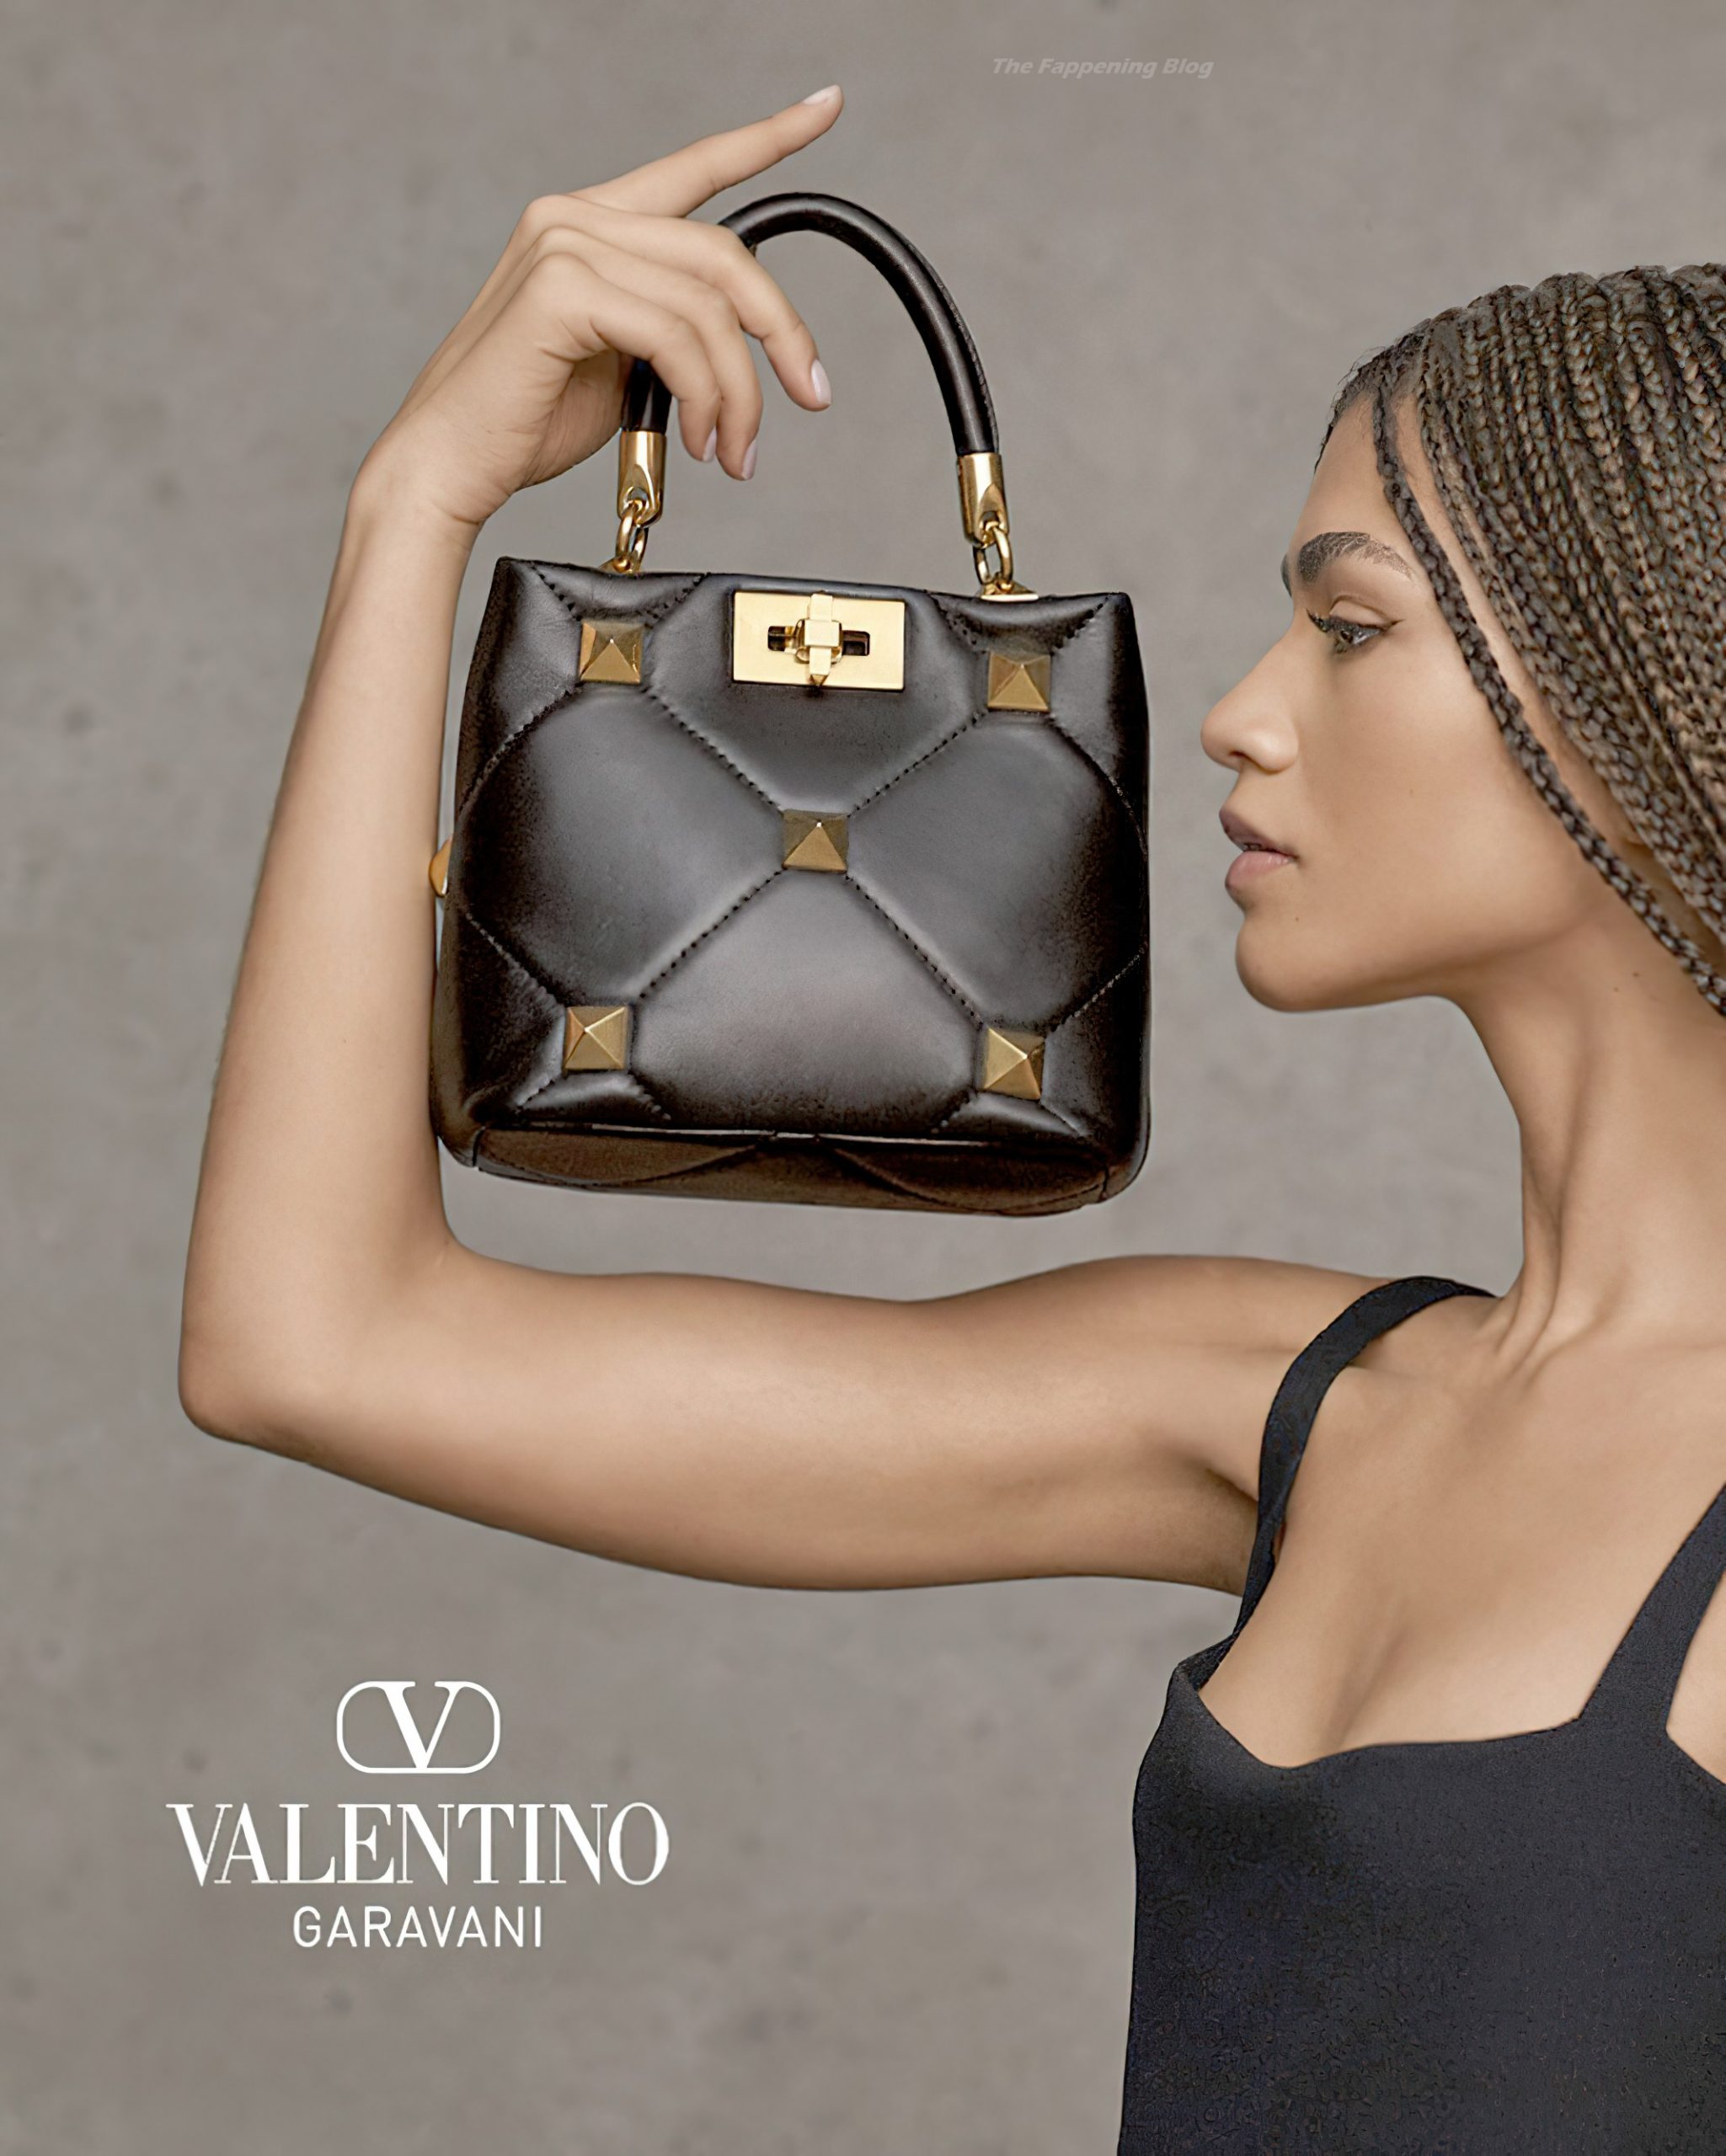 Zendaya Poses for Valentinos Handbag Campaign (5 Sexy Photos)